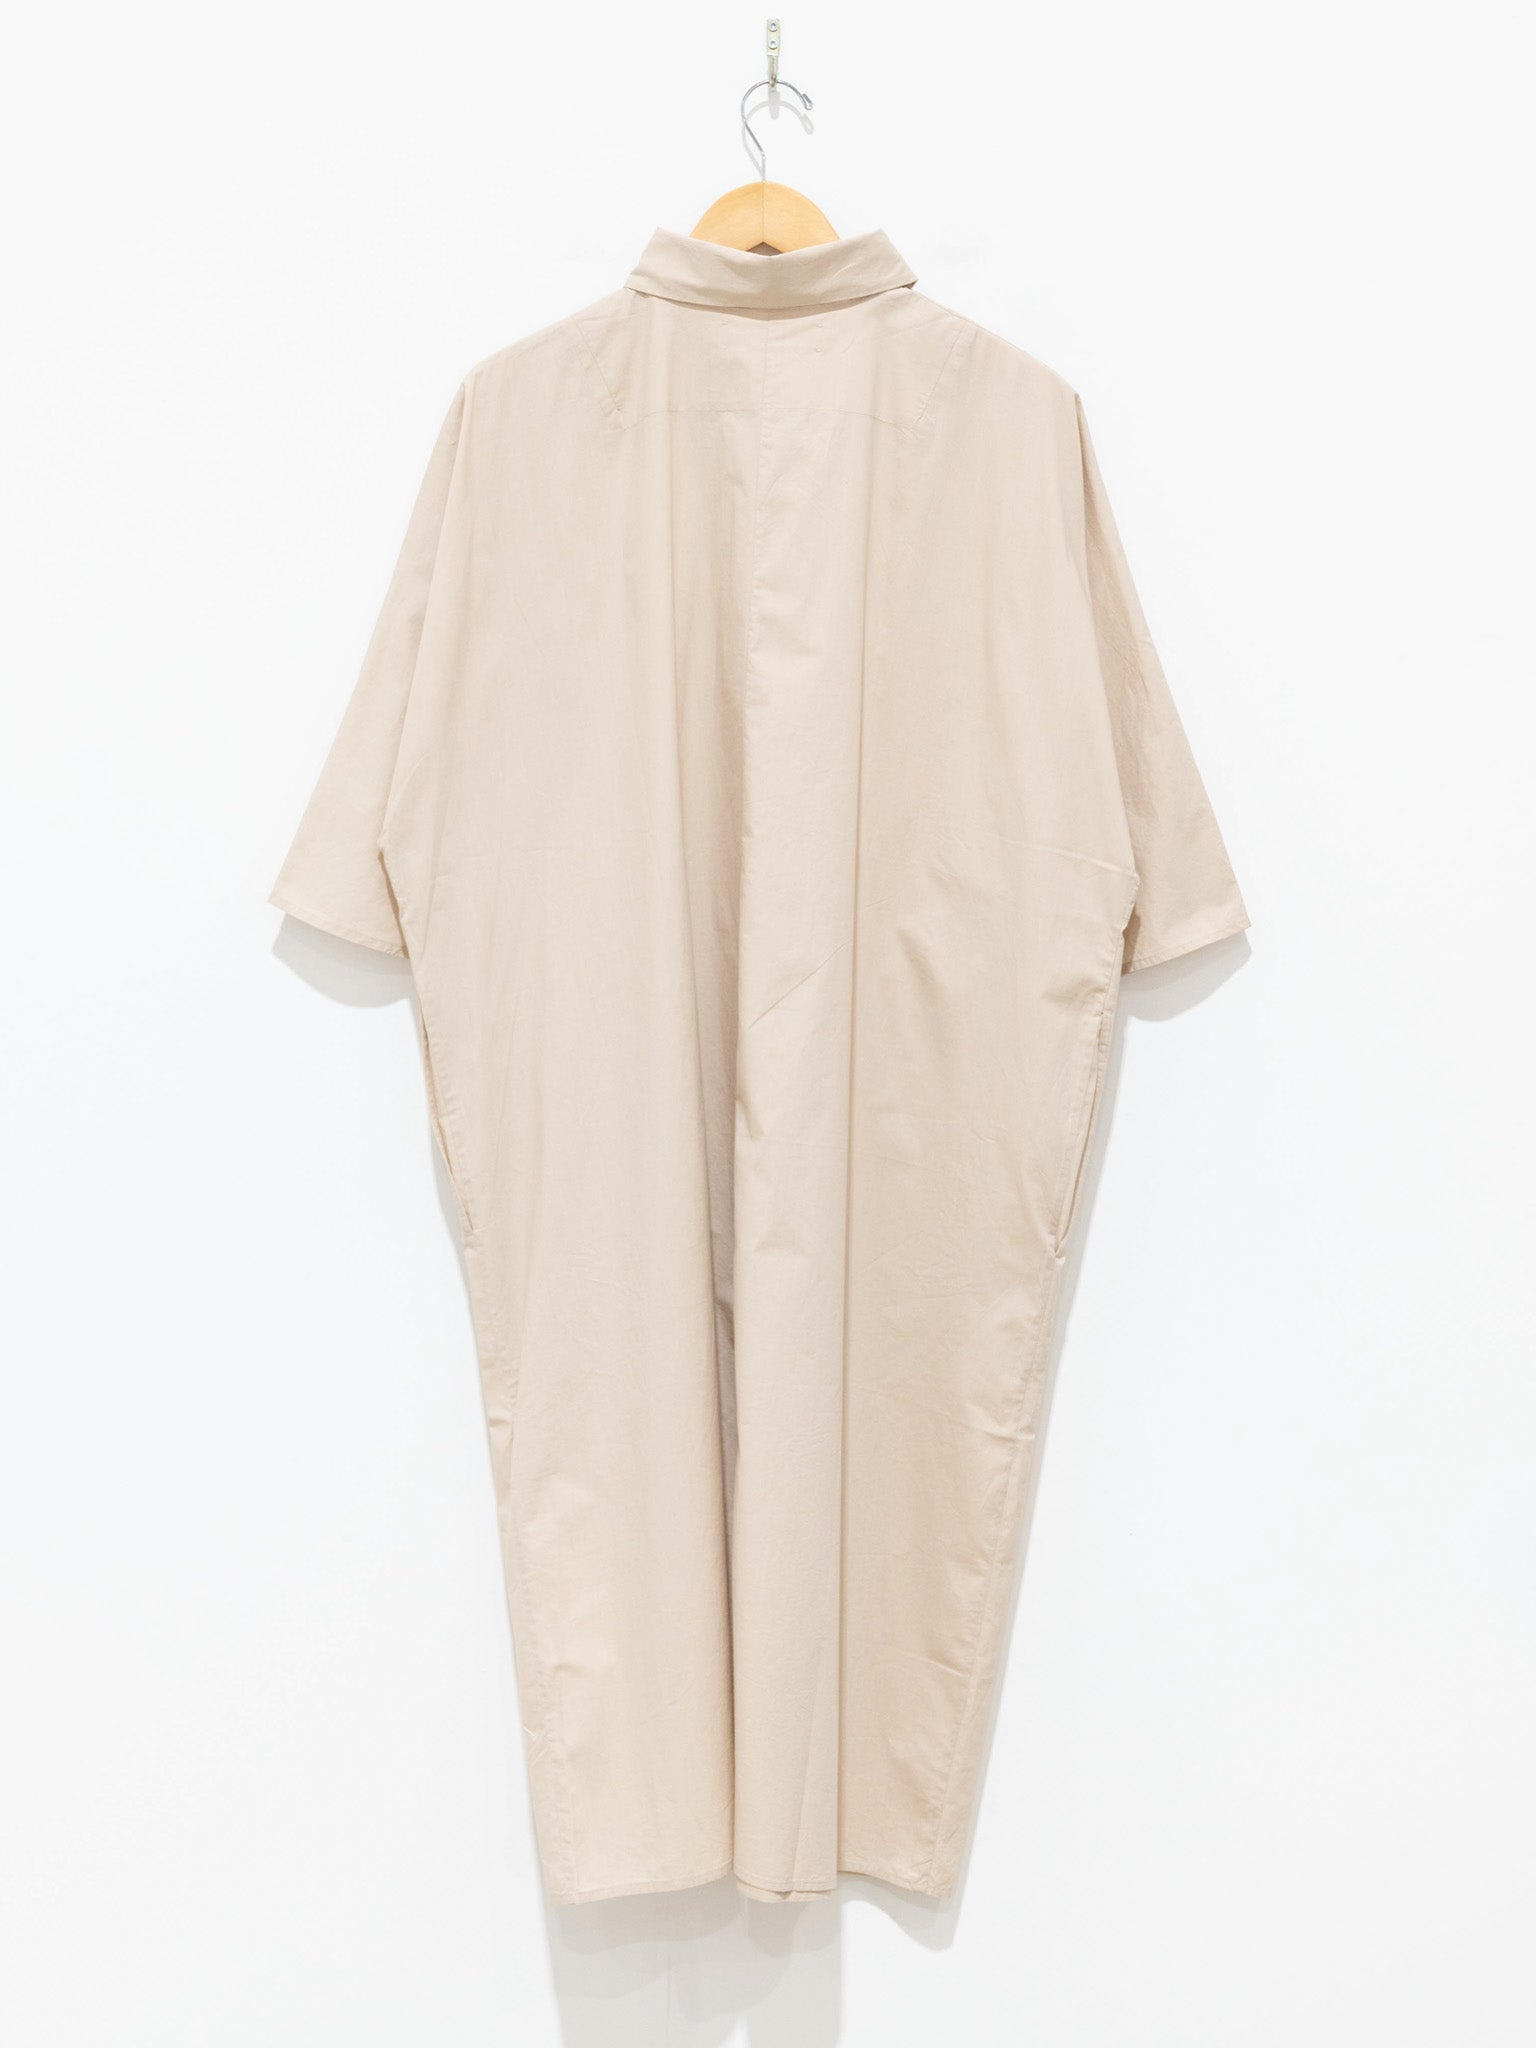 Namu Shop - Jan Machenhauer Mina Dress - Almond Cotton Poplin